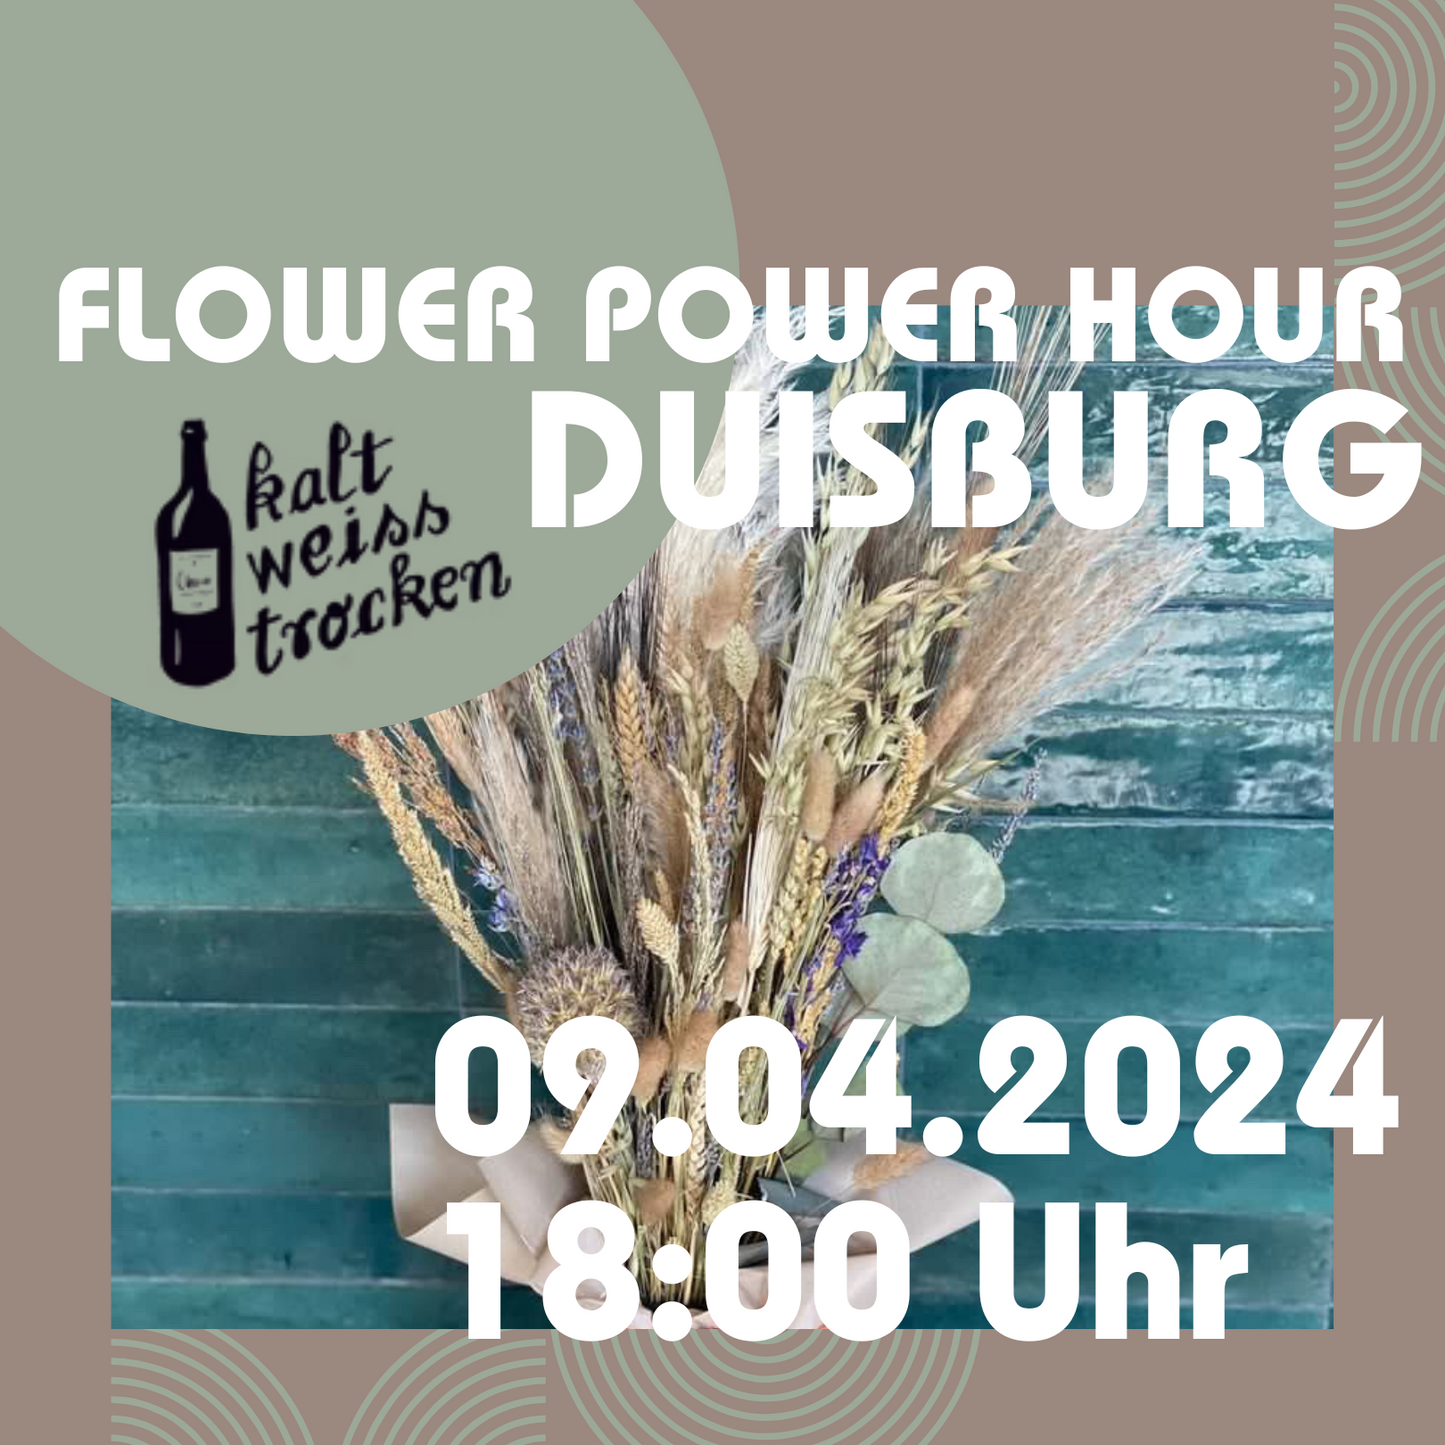 FLOWER POWER HOUR - Trockenblumenbouquet Workshop kalt.weiss.trocken. Duisburg 09.04.2024 18 Uhr